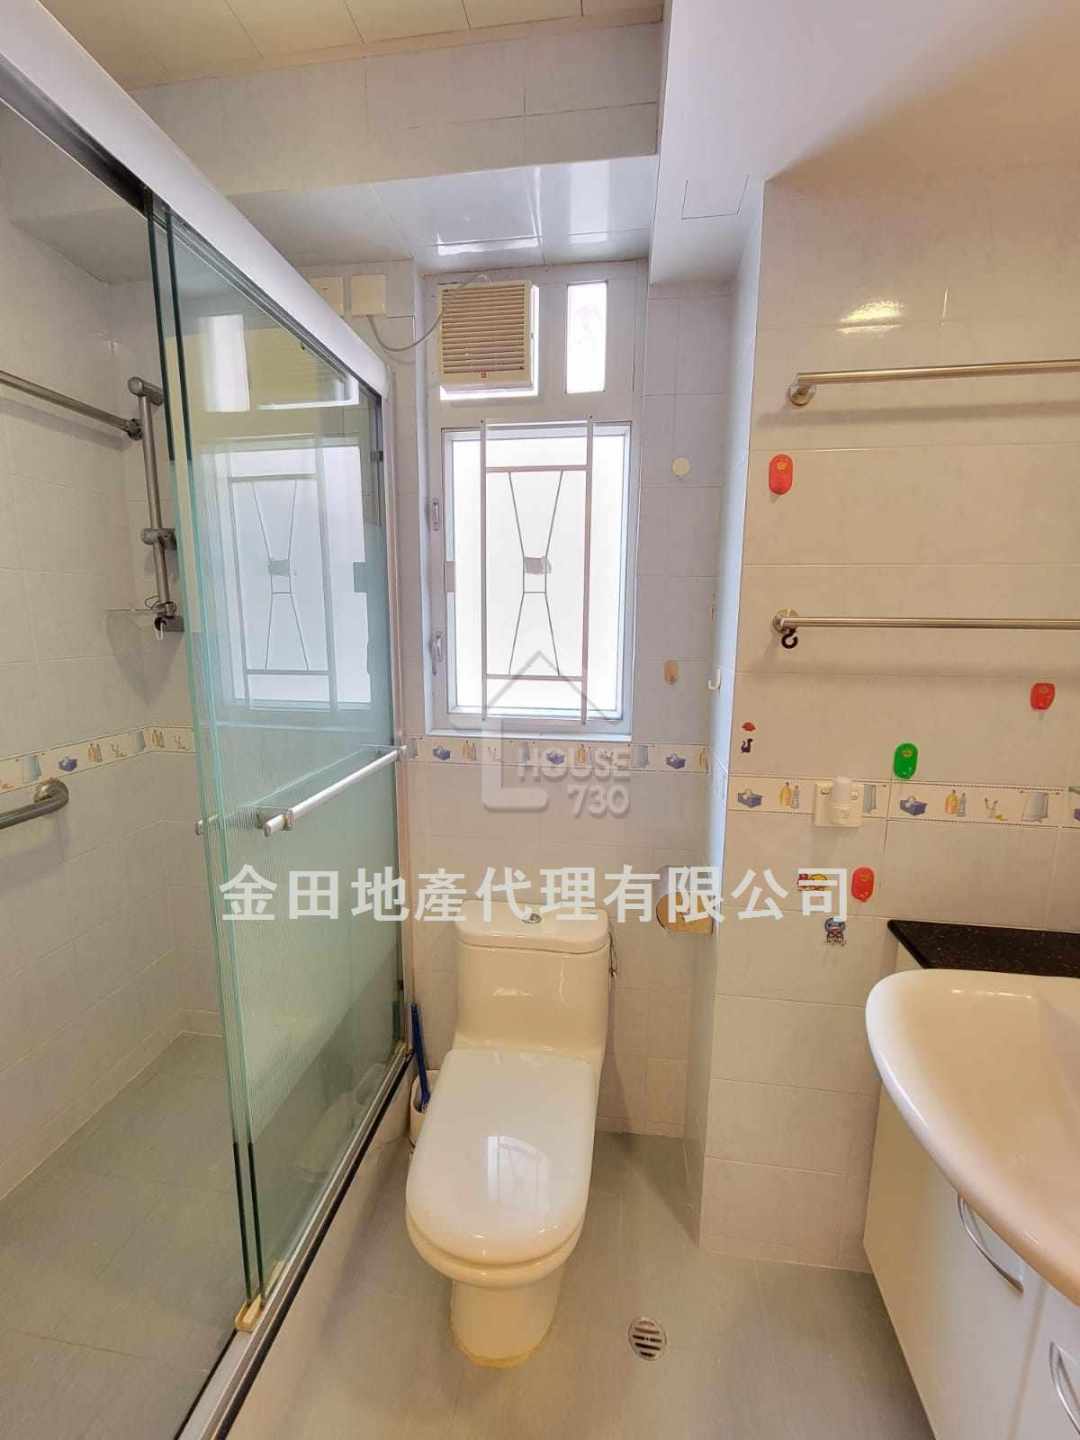 Wan Chai KWONG SANG HONG BUILDING Middle Floor Washroom House730-6282601